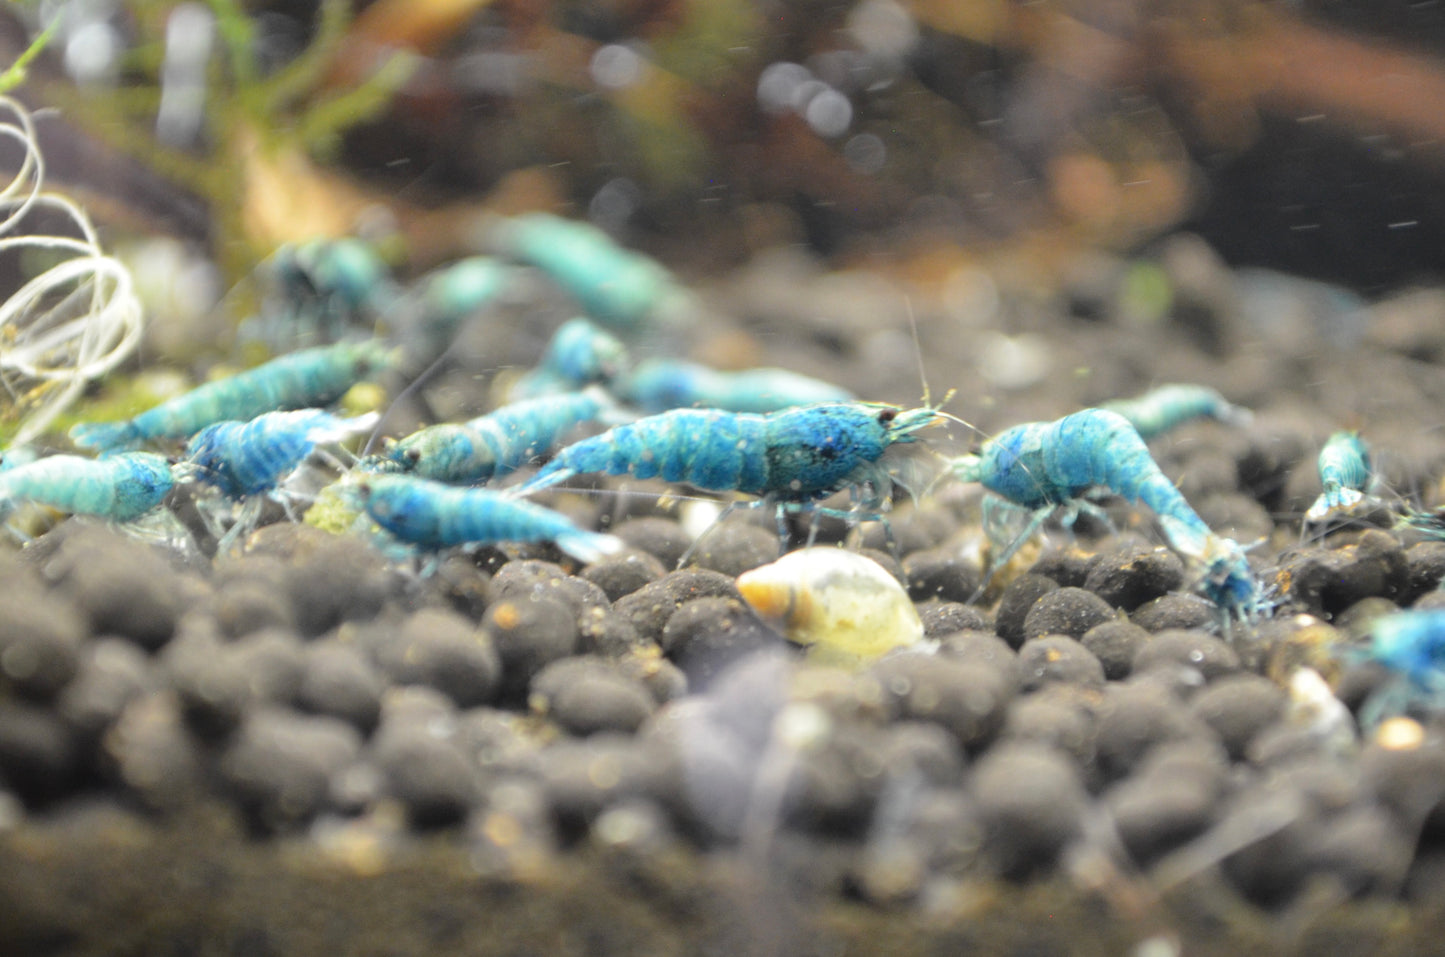 Bluebolt extreme Caridina Shrimp group